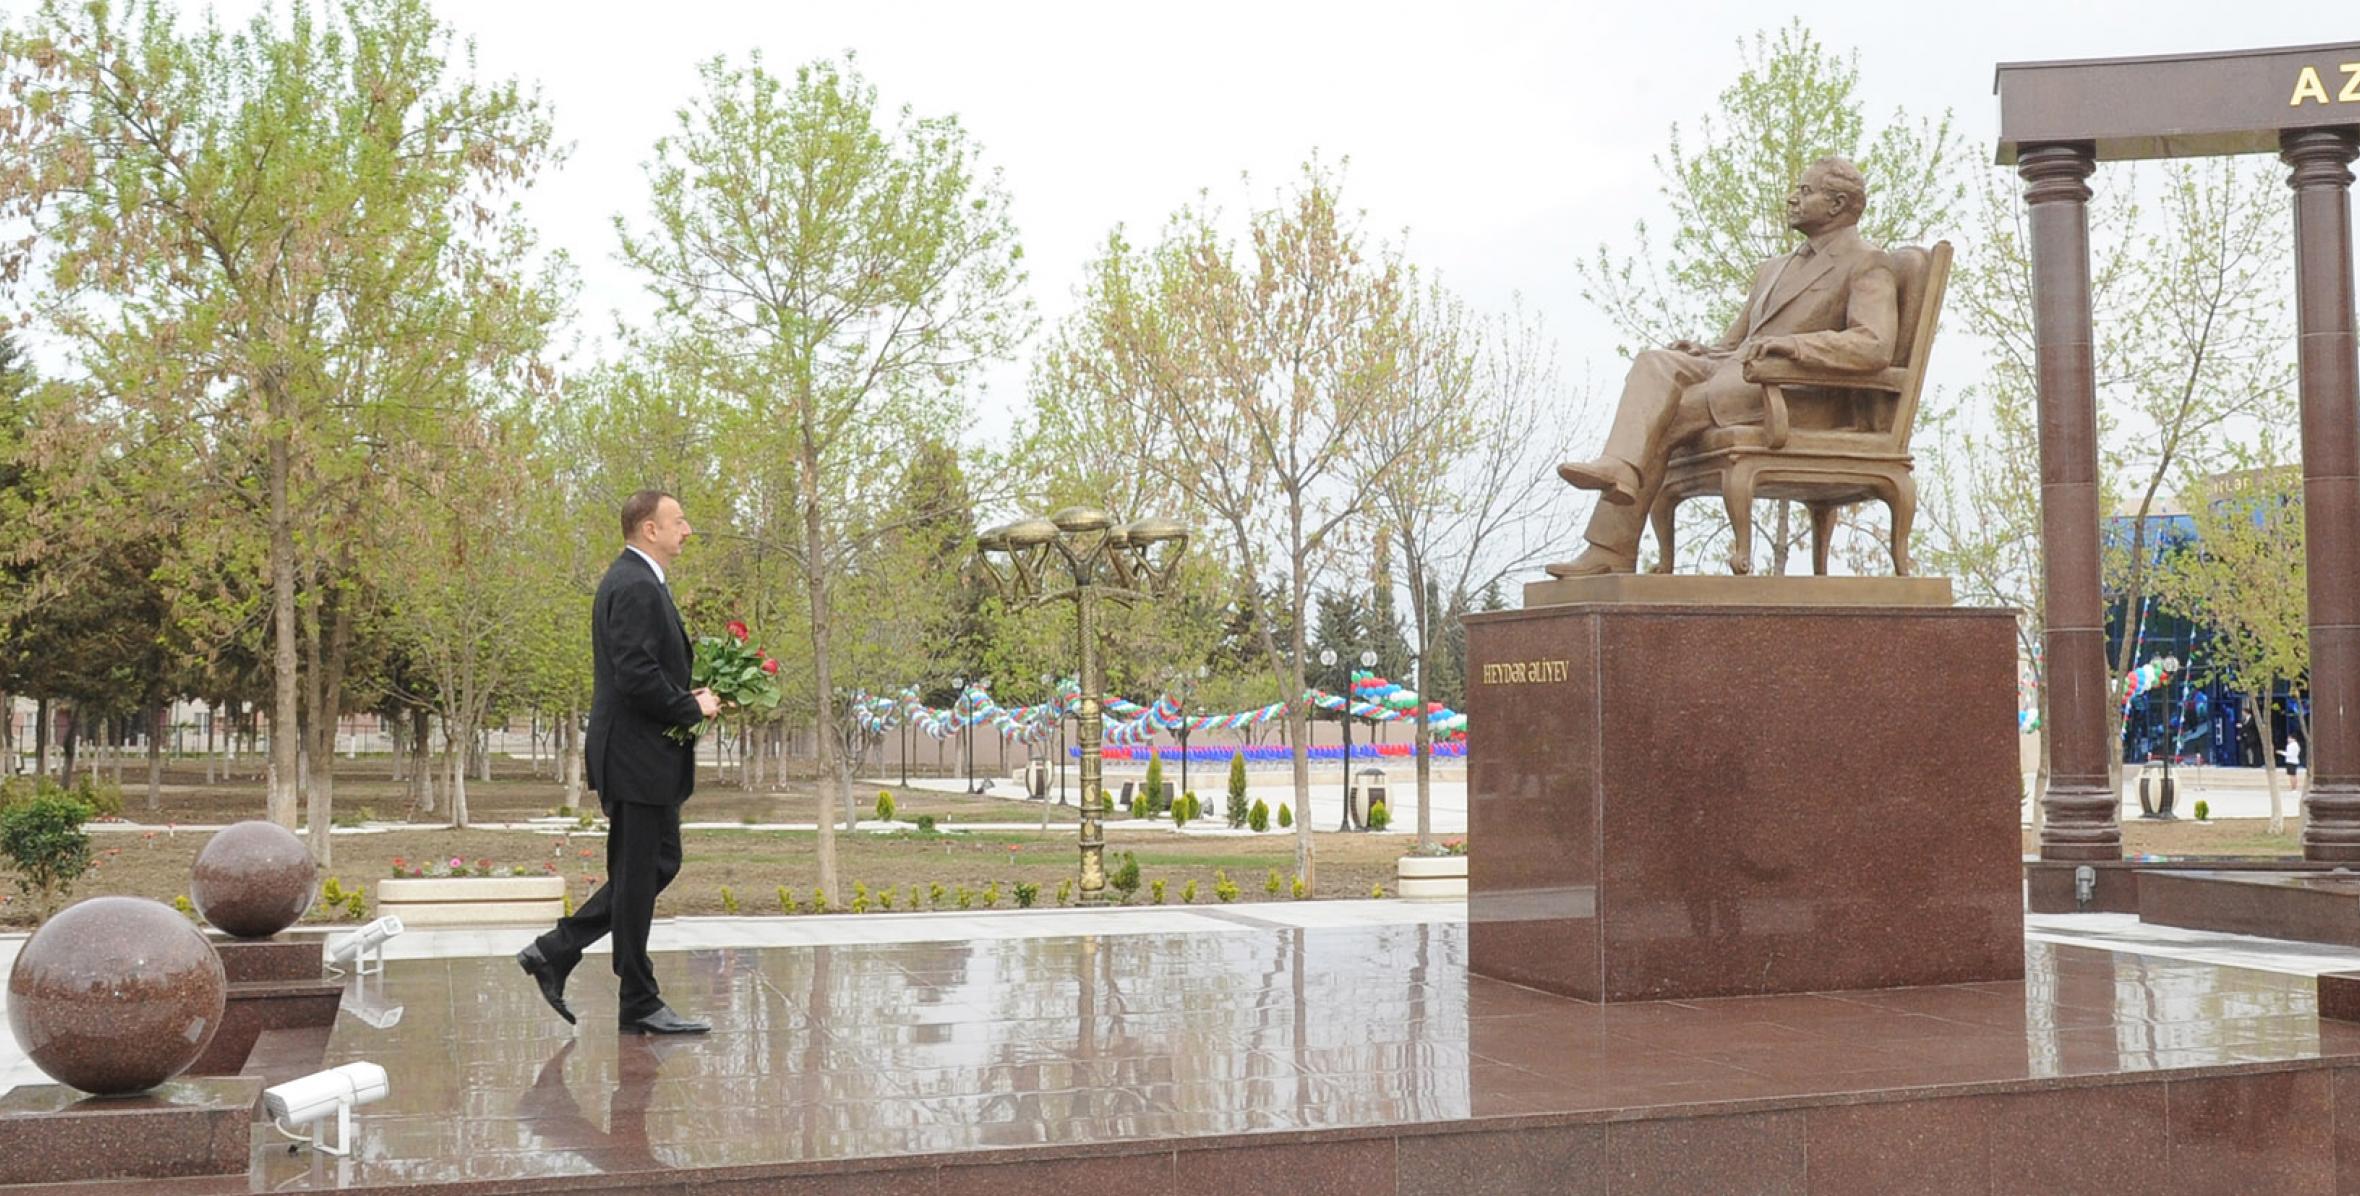 Ilham Aliyev visited the statue of nationwide leader Heydar Aliyev in Agstafa